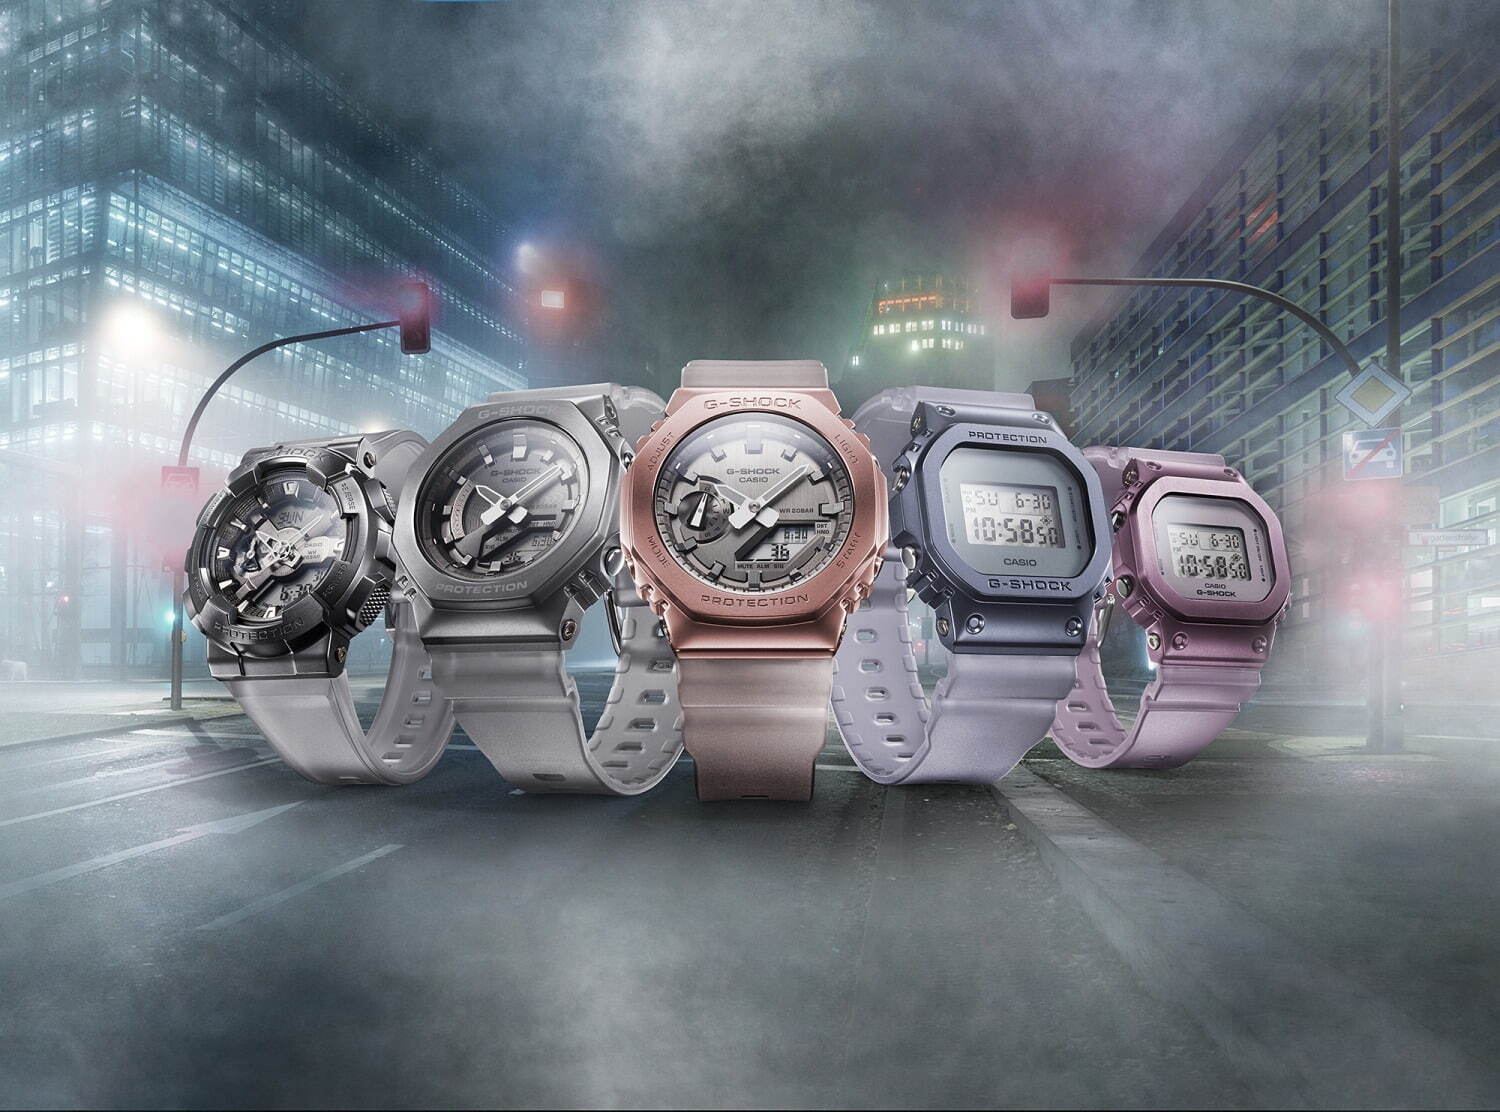 G-SHOCKから夜霧を表現した新作腕時計、ニュートラルカラーのメタル